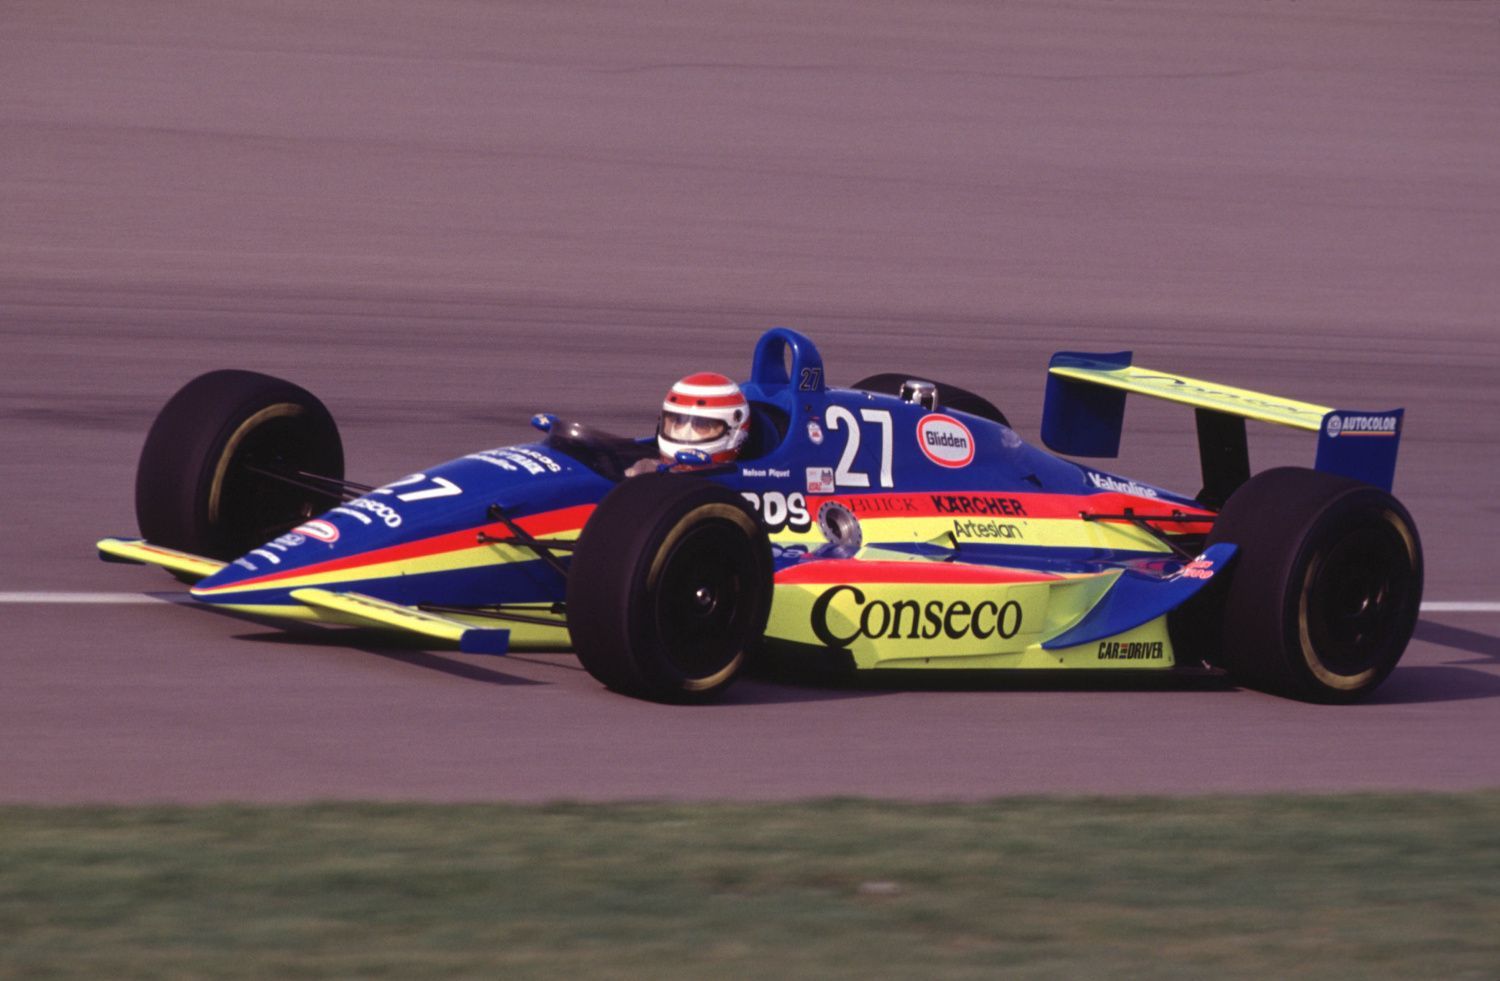 Indy 500: Nelson Piquet -1992